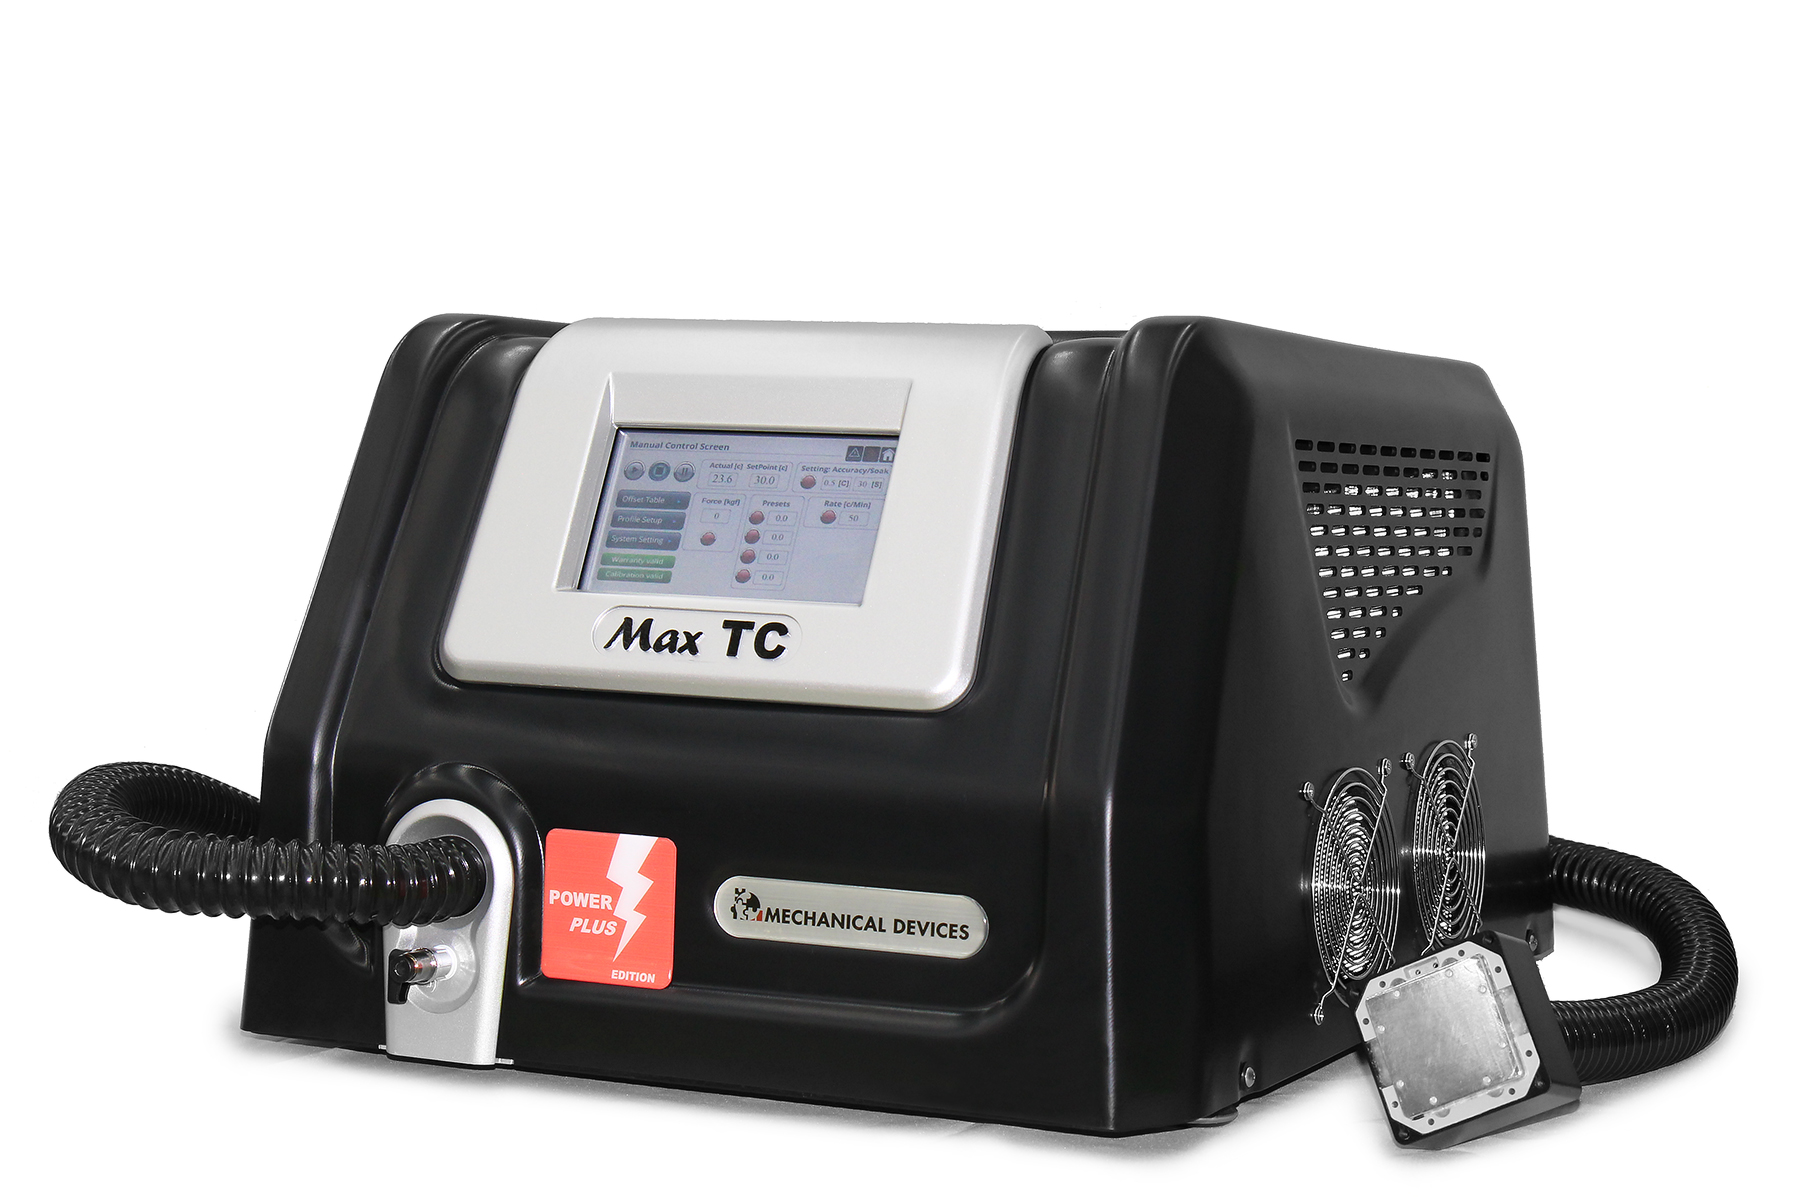 Thermal power. TC Power v3. Power tc200iiia. Стабилизатор Power Plus. Тестовое оборудование для микроэлектроники.